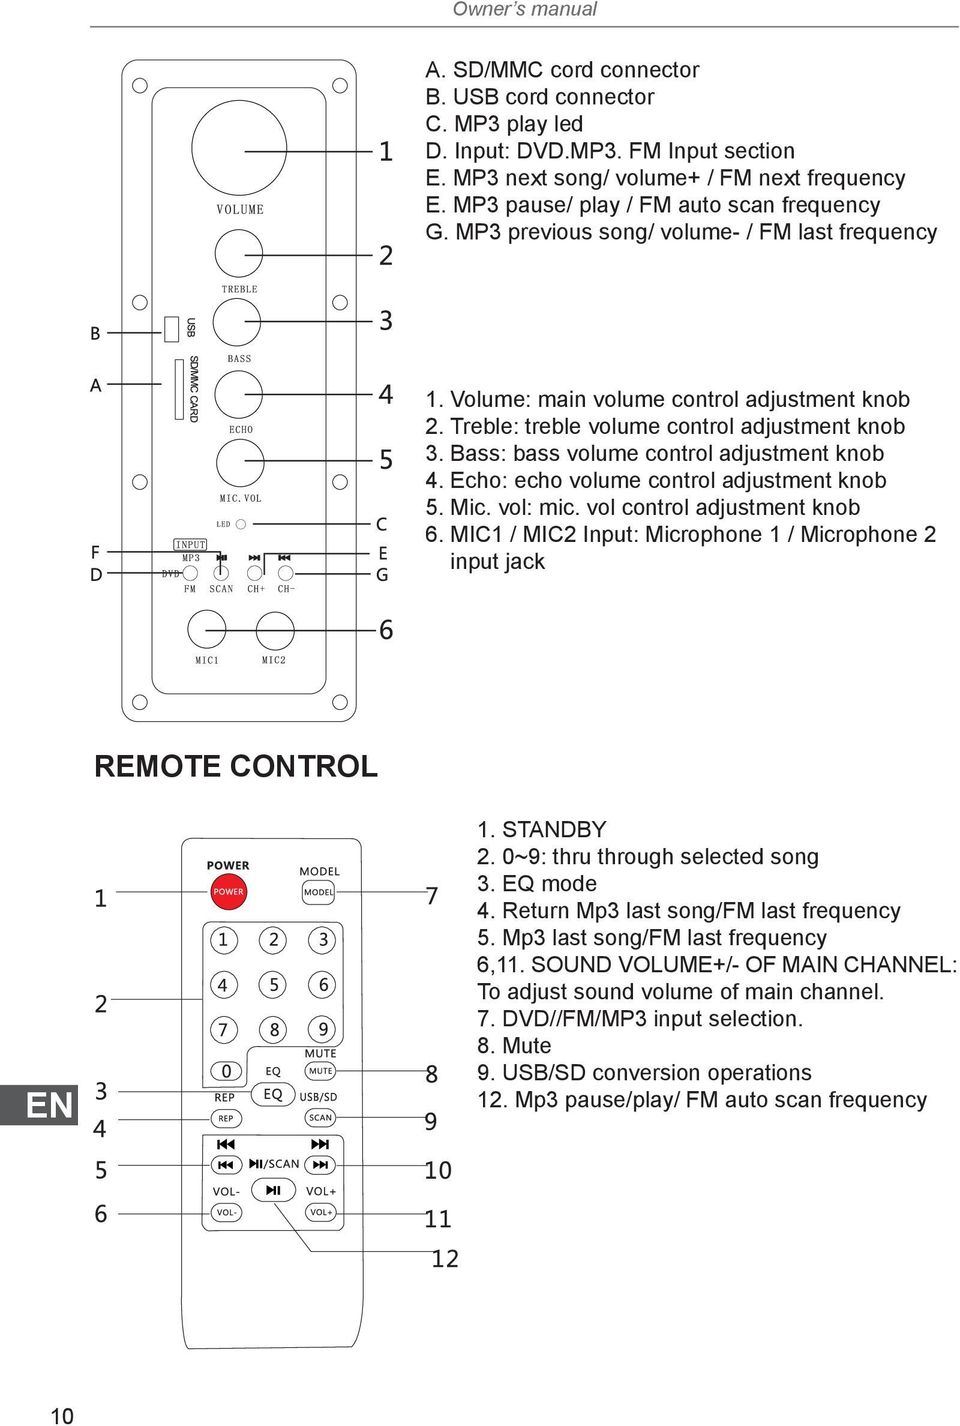 Bass: bass volume control adjustment knob 4. Echo: echo volume control adjustment knob 5. Mic. vol: mic. vol control adjustment knob 6.